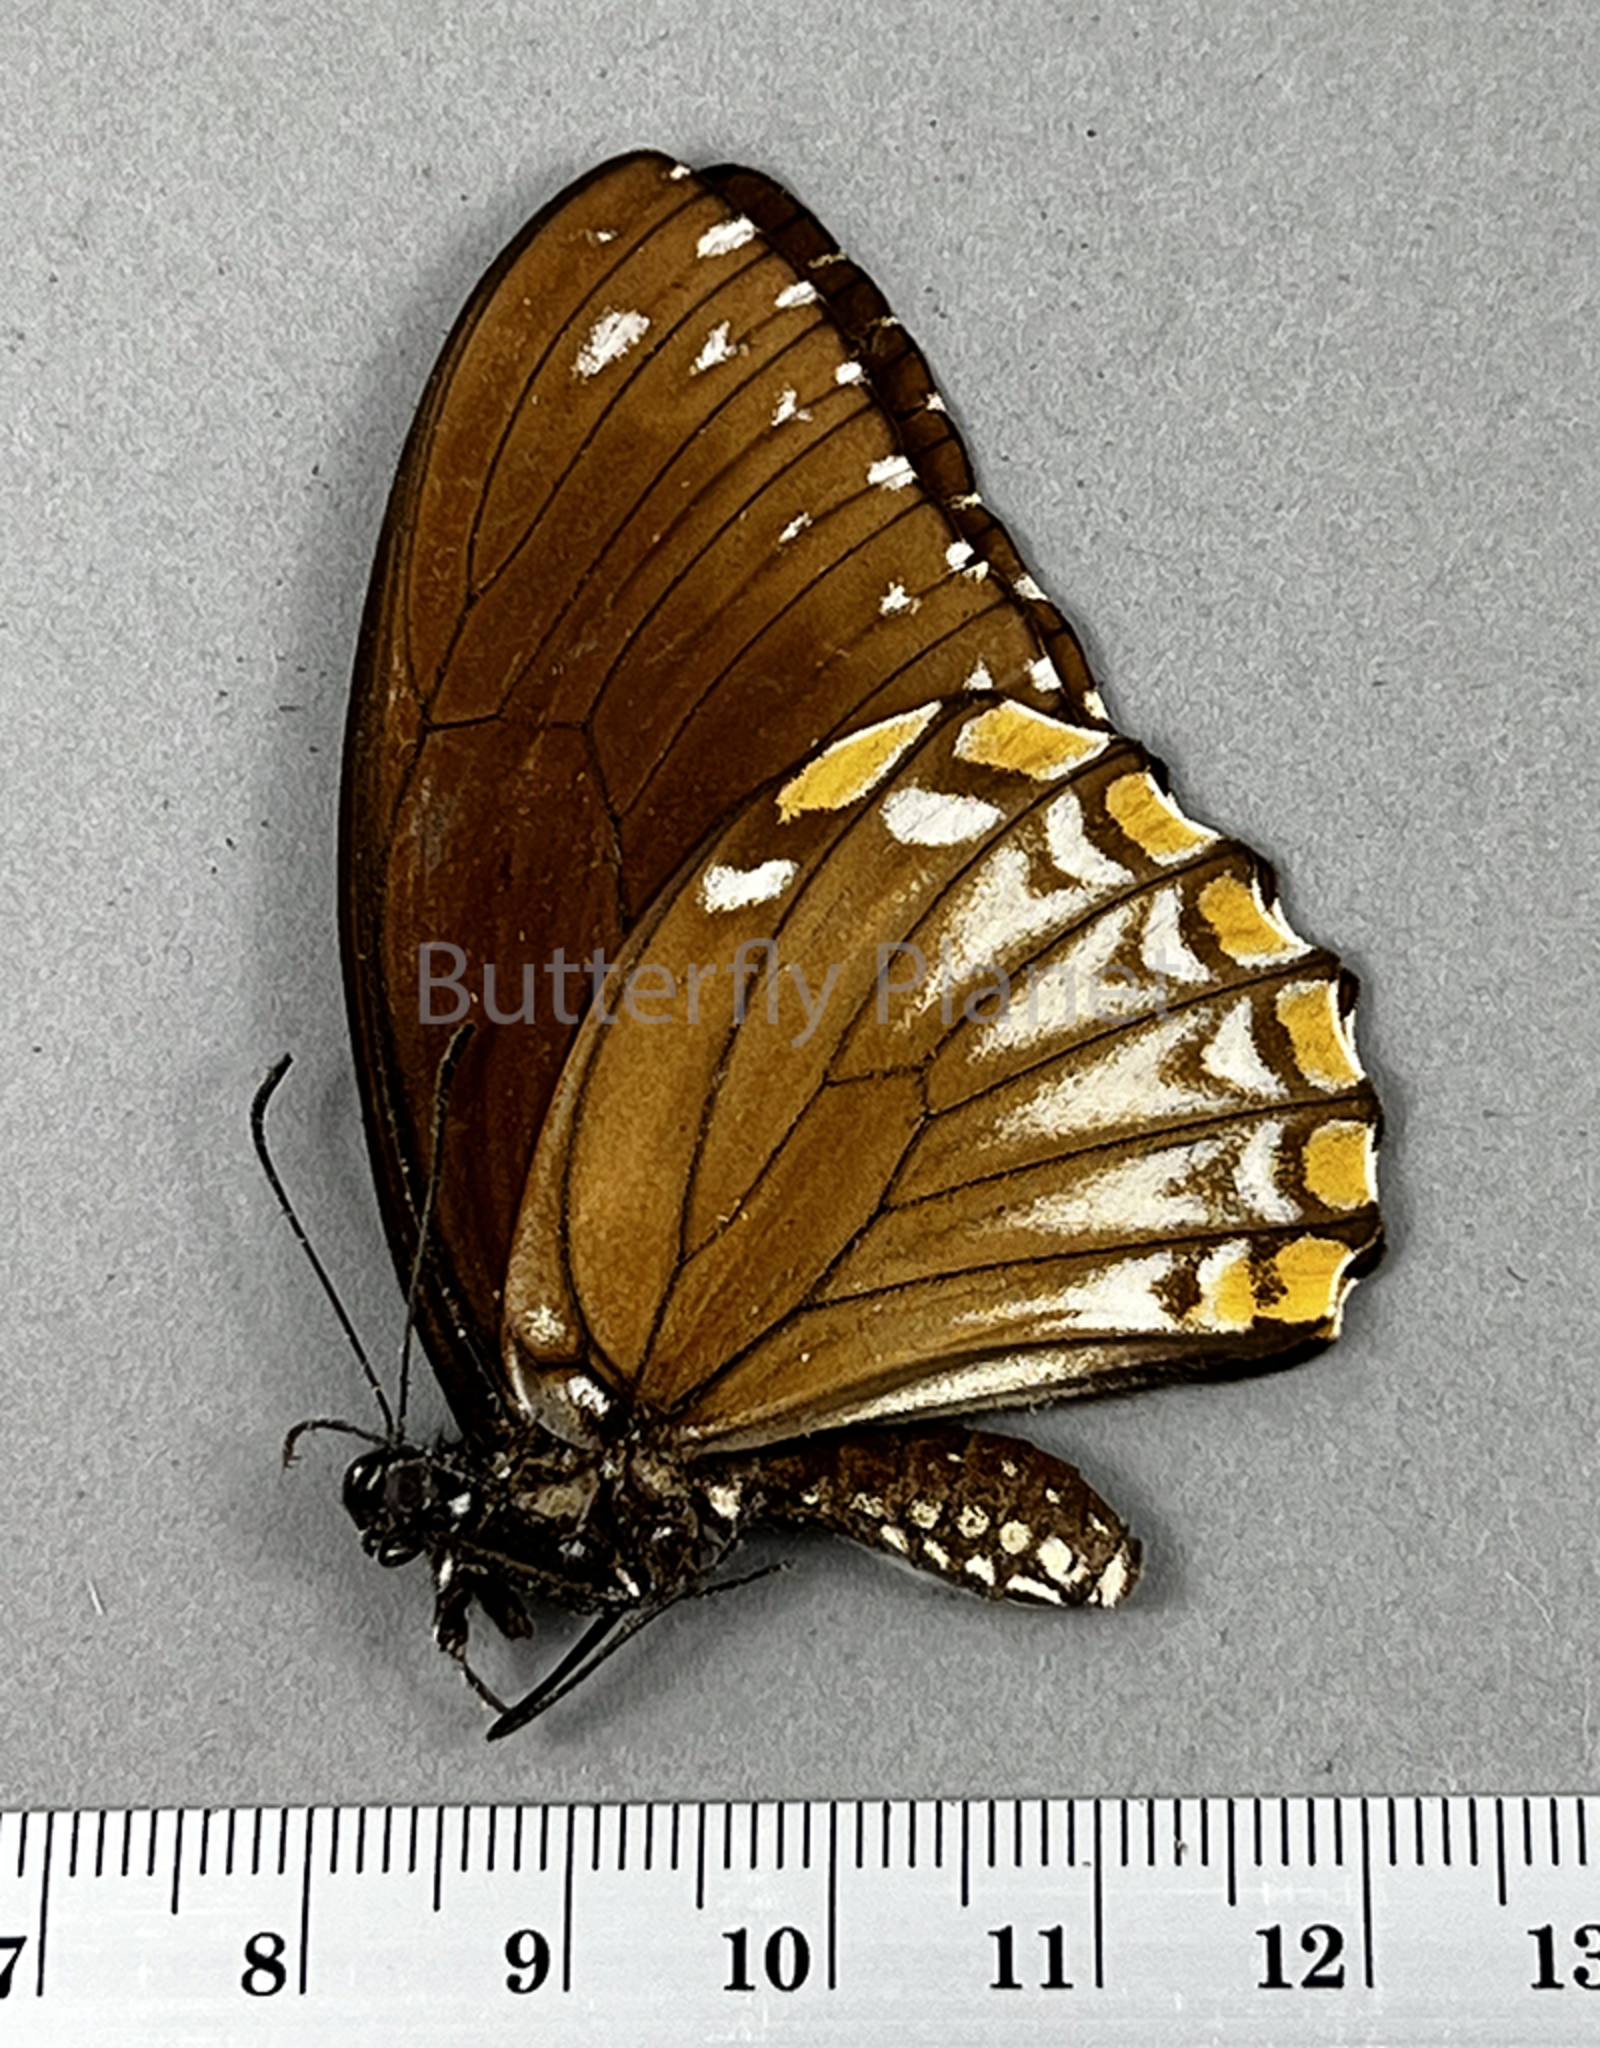 Chilasa clytia lankeswara brown form F A1 Sri Lanka